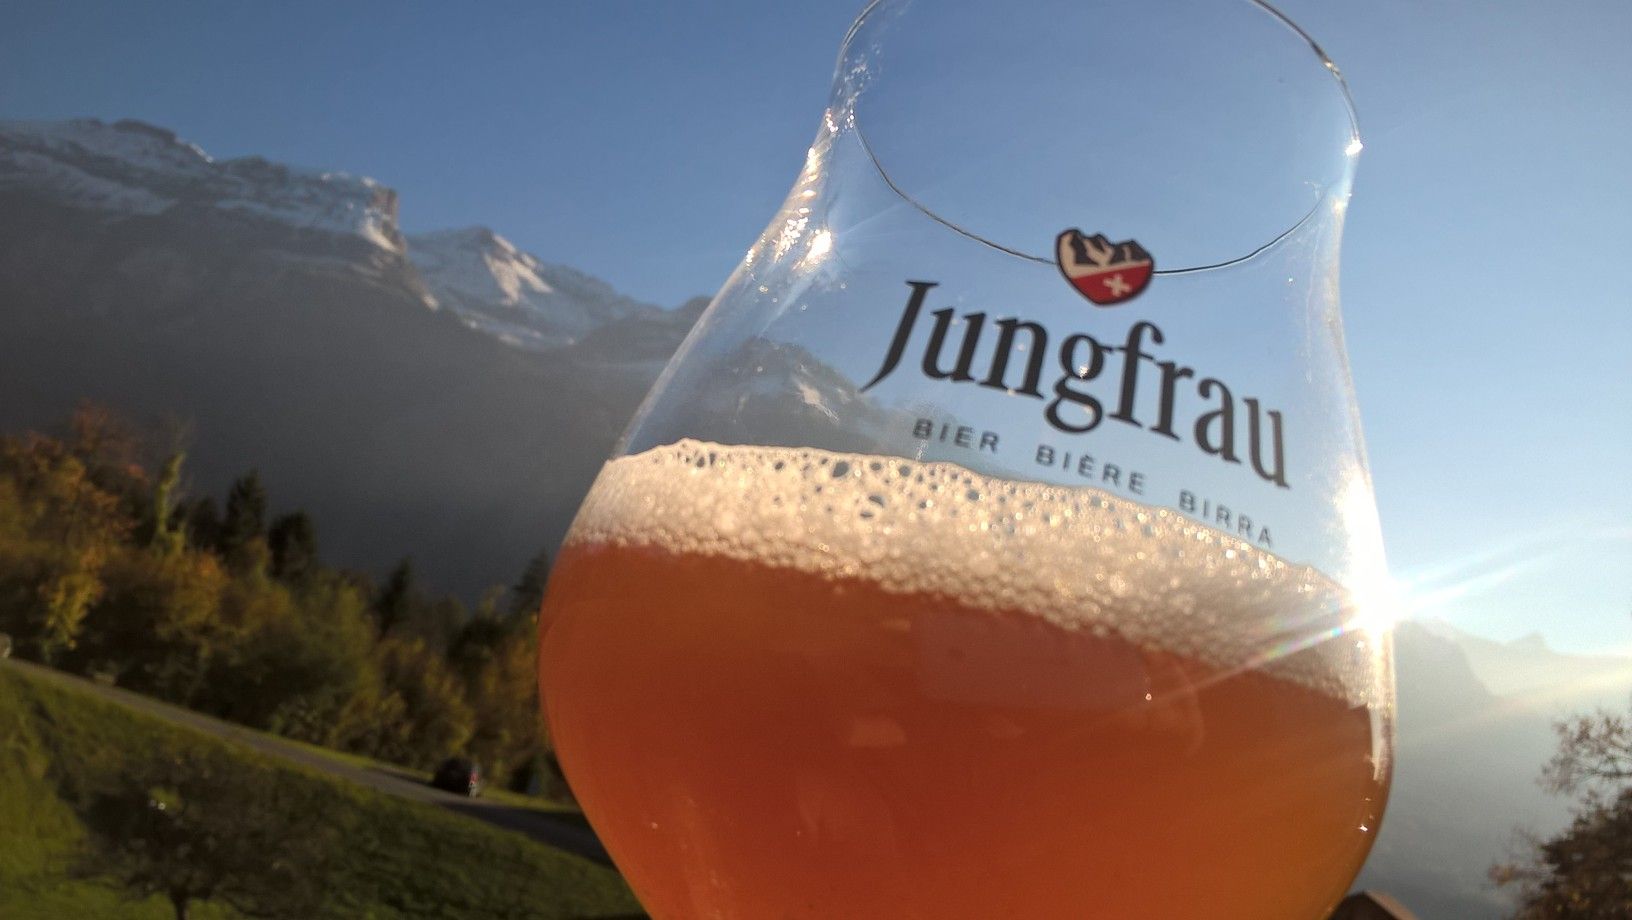 JungfrauBräu